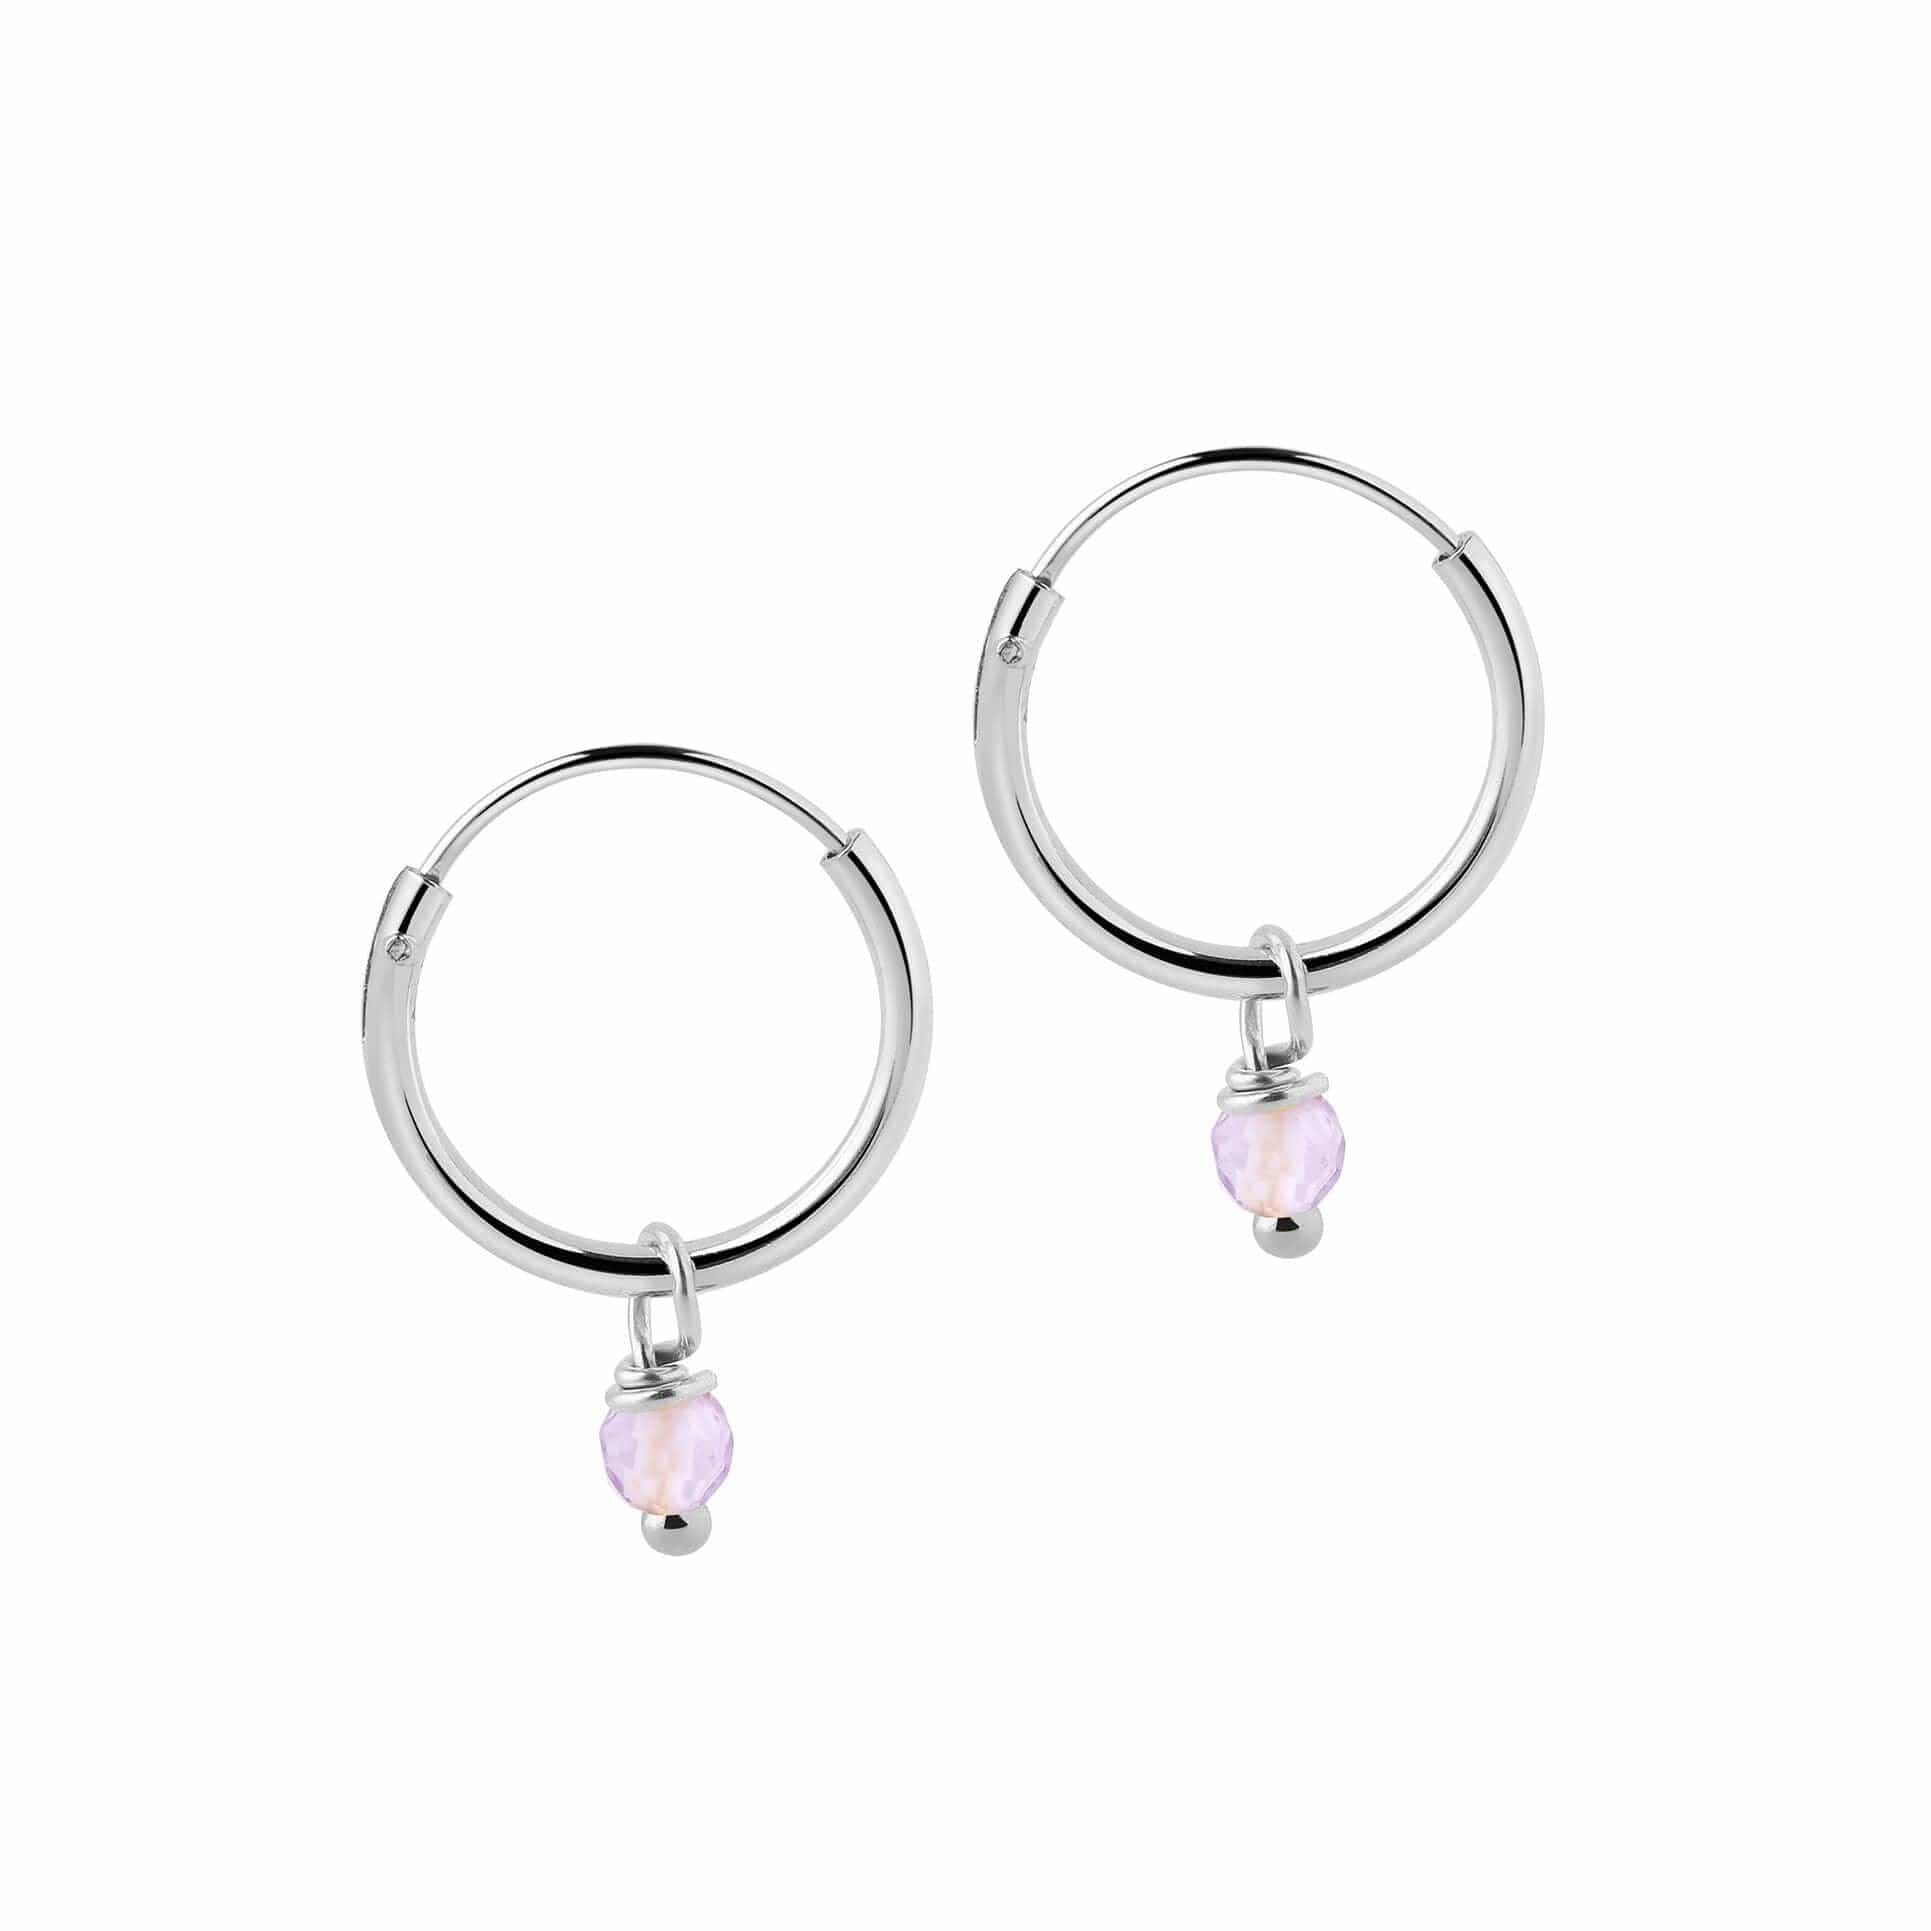 12 mm Silver Hoop Earrings with Purple Stone